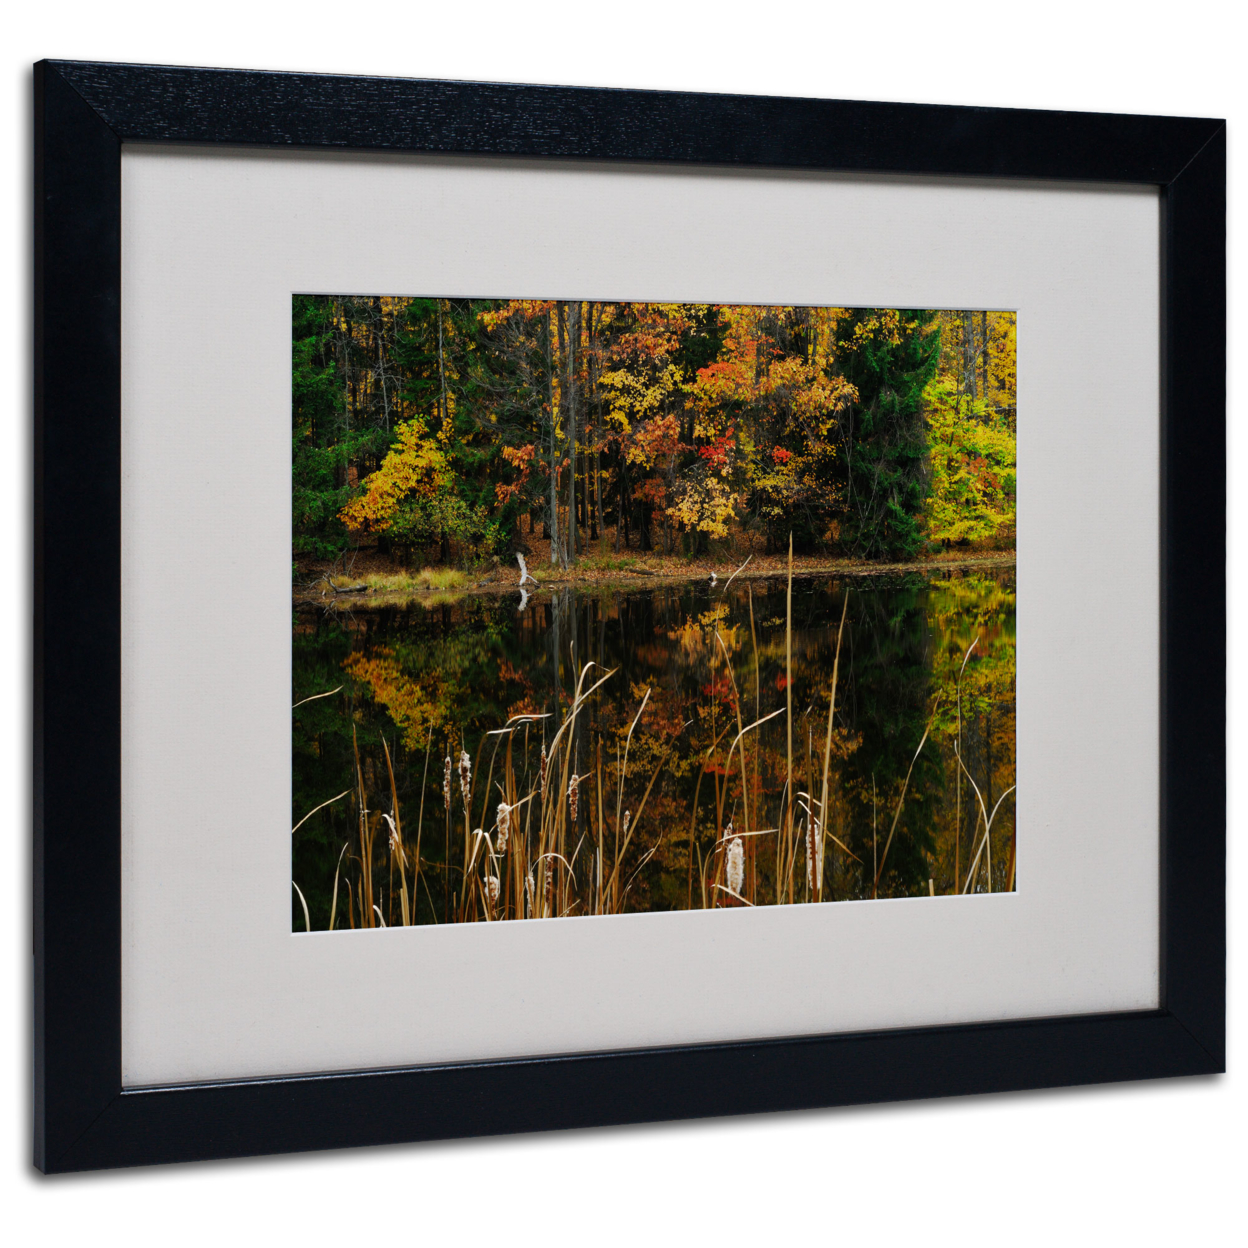 Kurt Shaffer 'Beautiful Memory' Black Wooden Framed Art 18 X 22 Inches